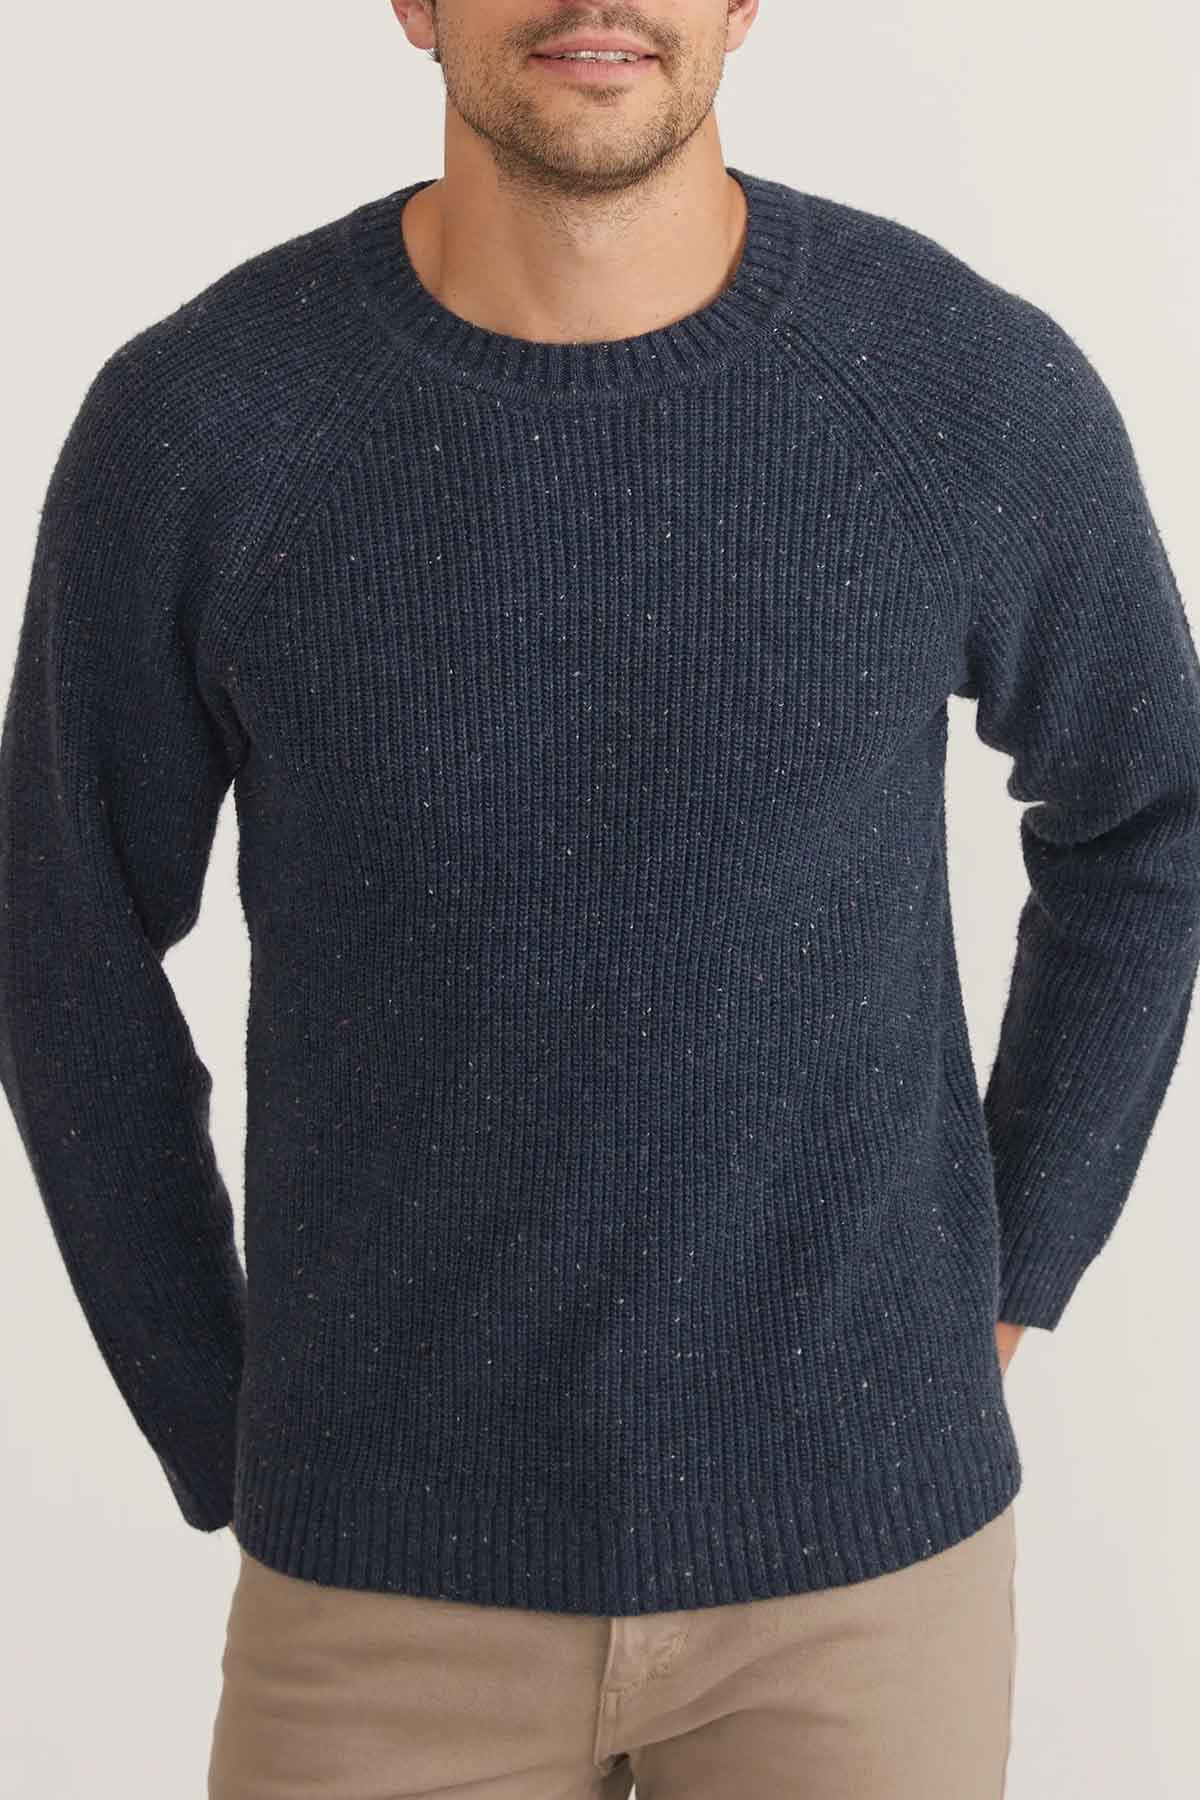 Marine Layer - Coleman Crewneck Sweater - Orion Blue - Front